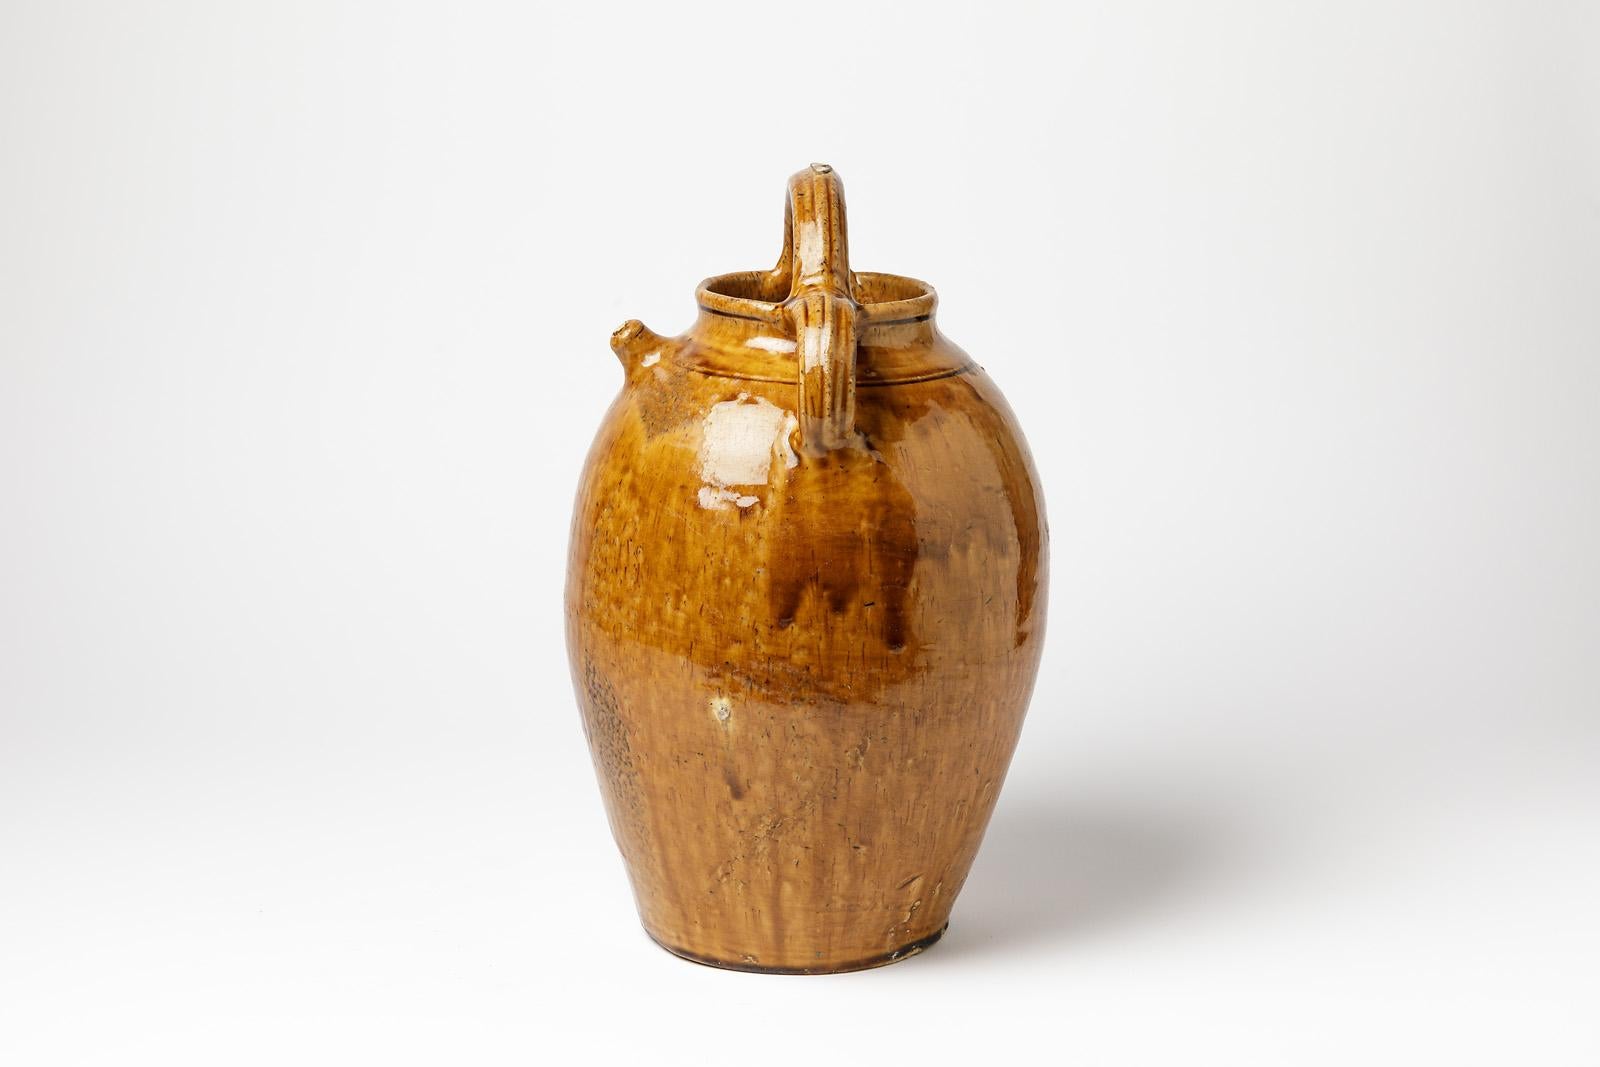 Folk Art 19th Century Yellow Stoneware Ceramic Pitcher or Vase by La Borne Pottery